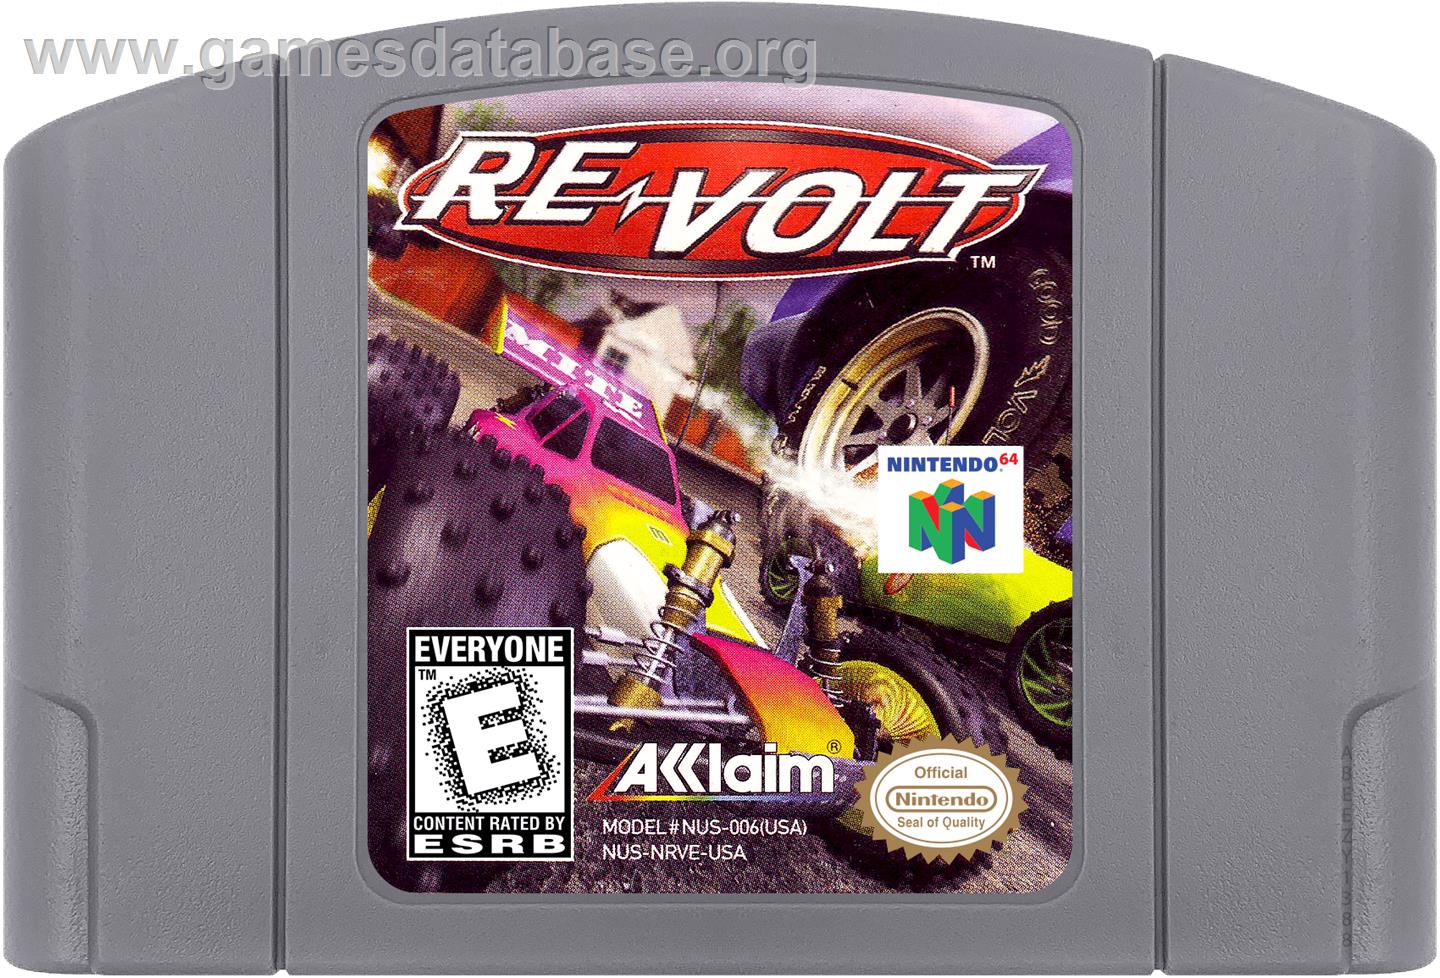 Re-Volt - Nintendo N64 - Artwork - Cartridge